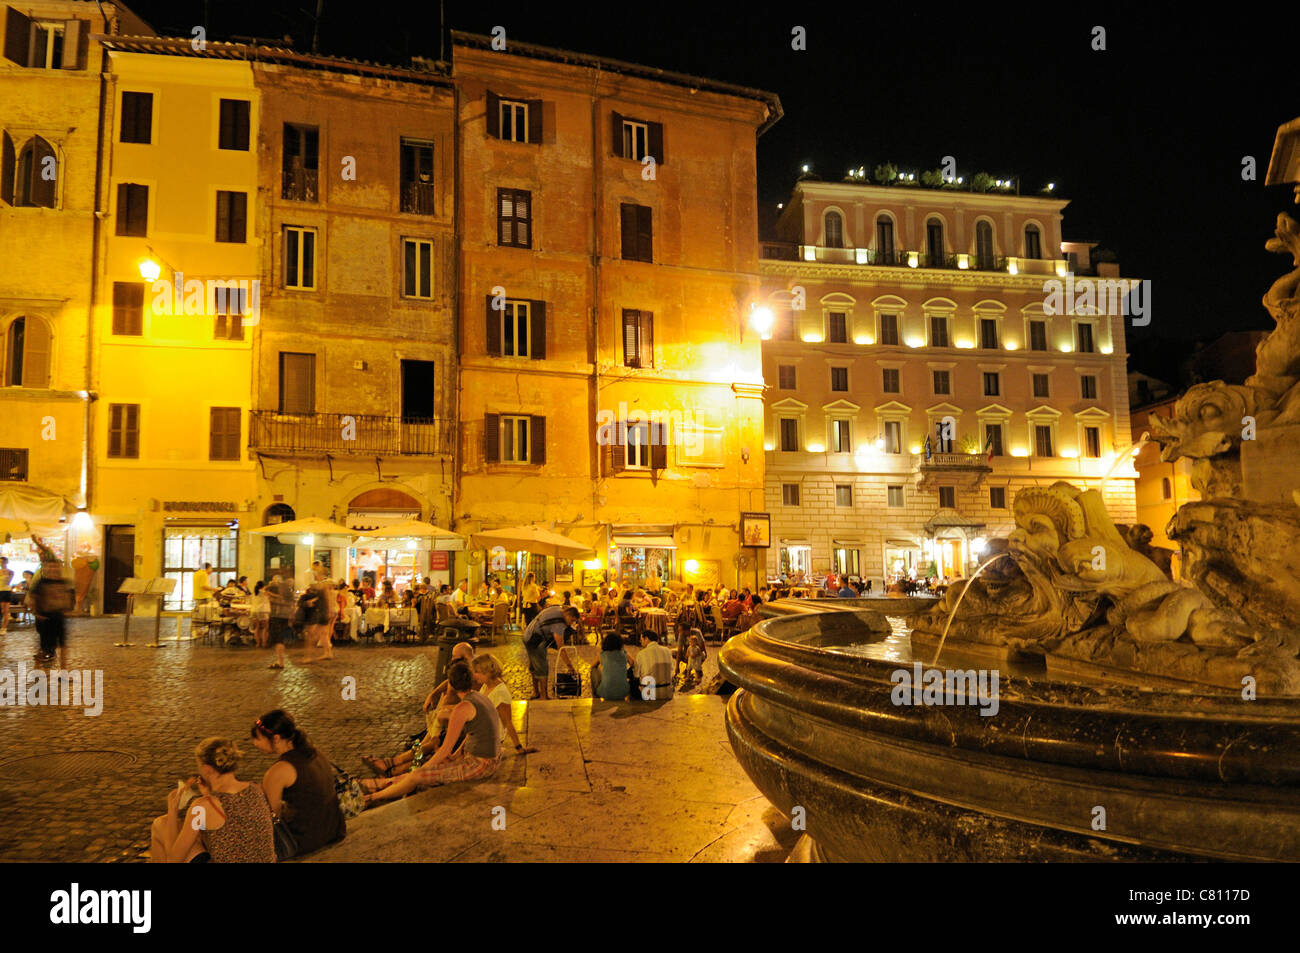 Piazza Della Rotonda, Rome, Italy at night Stock Photo